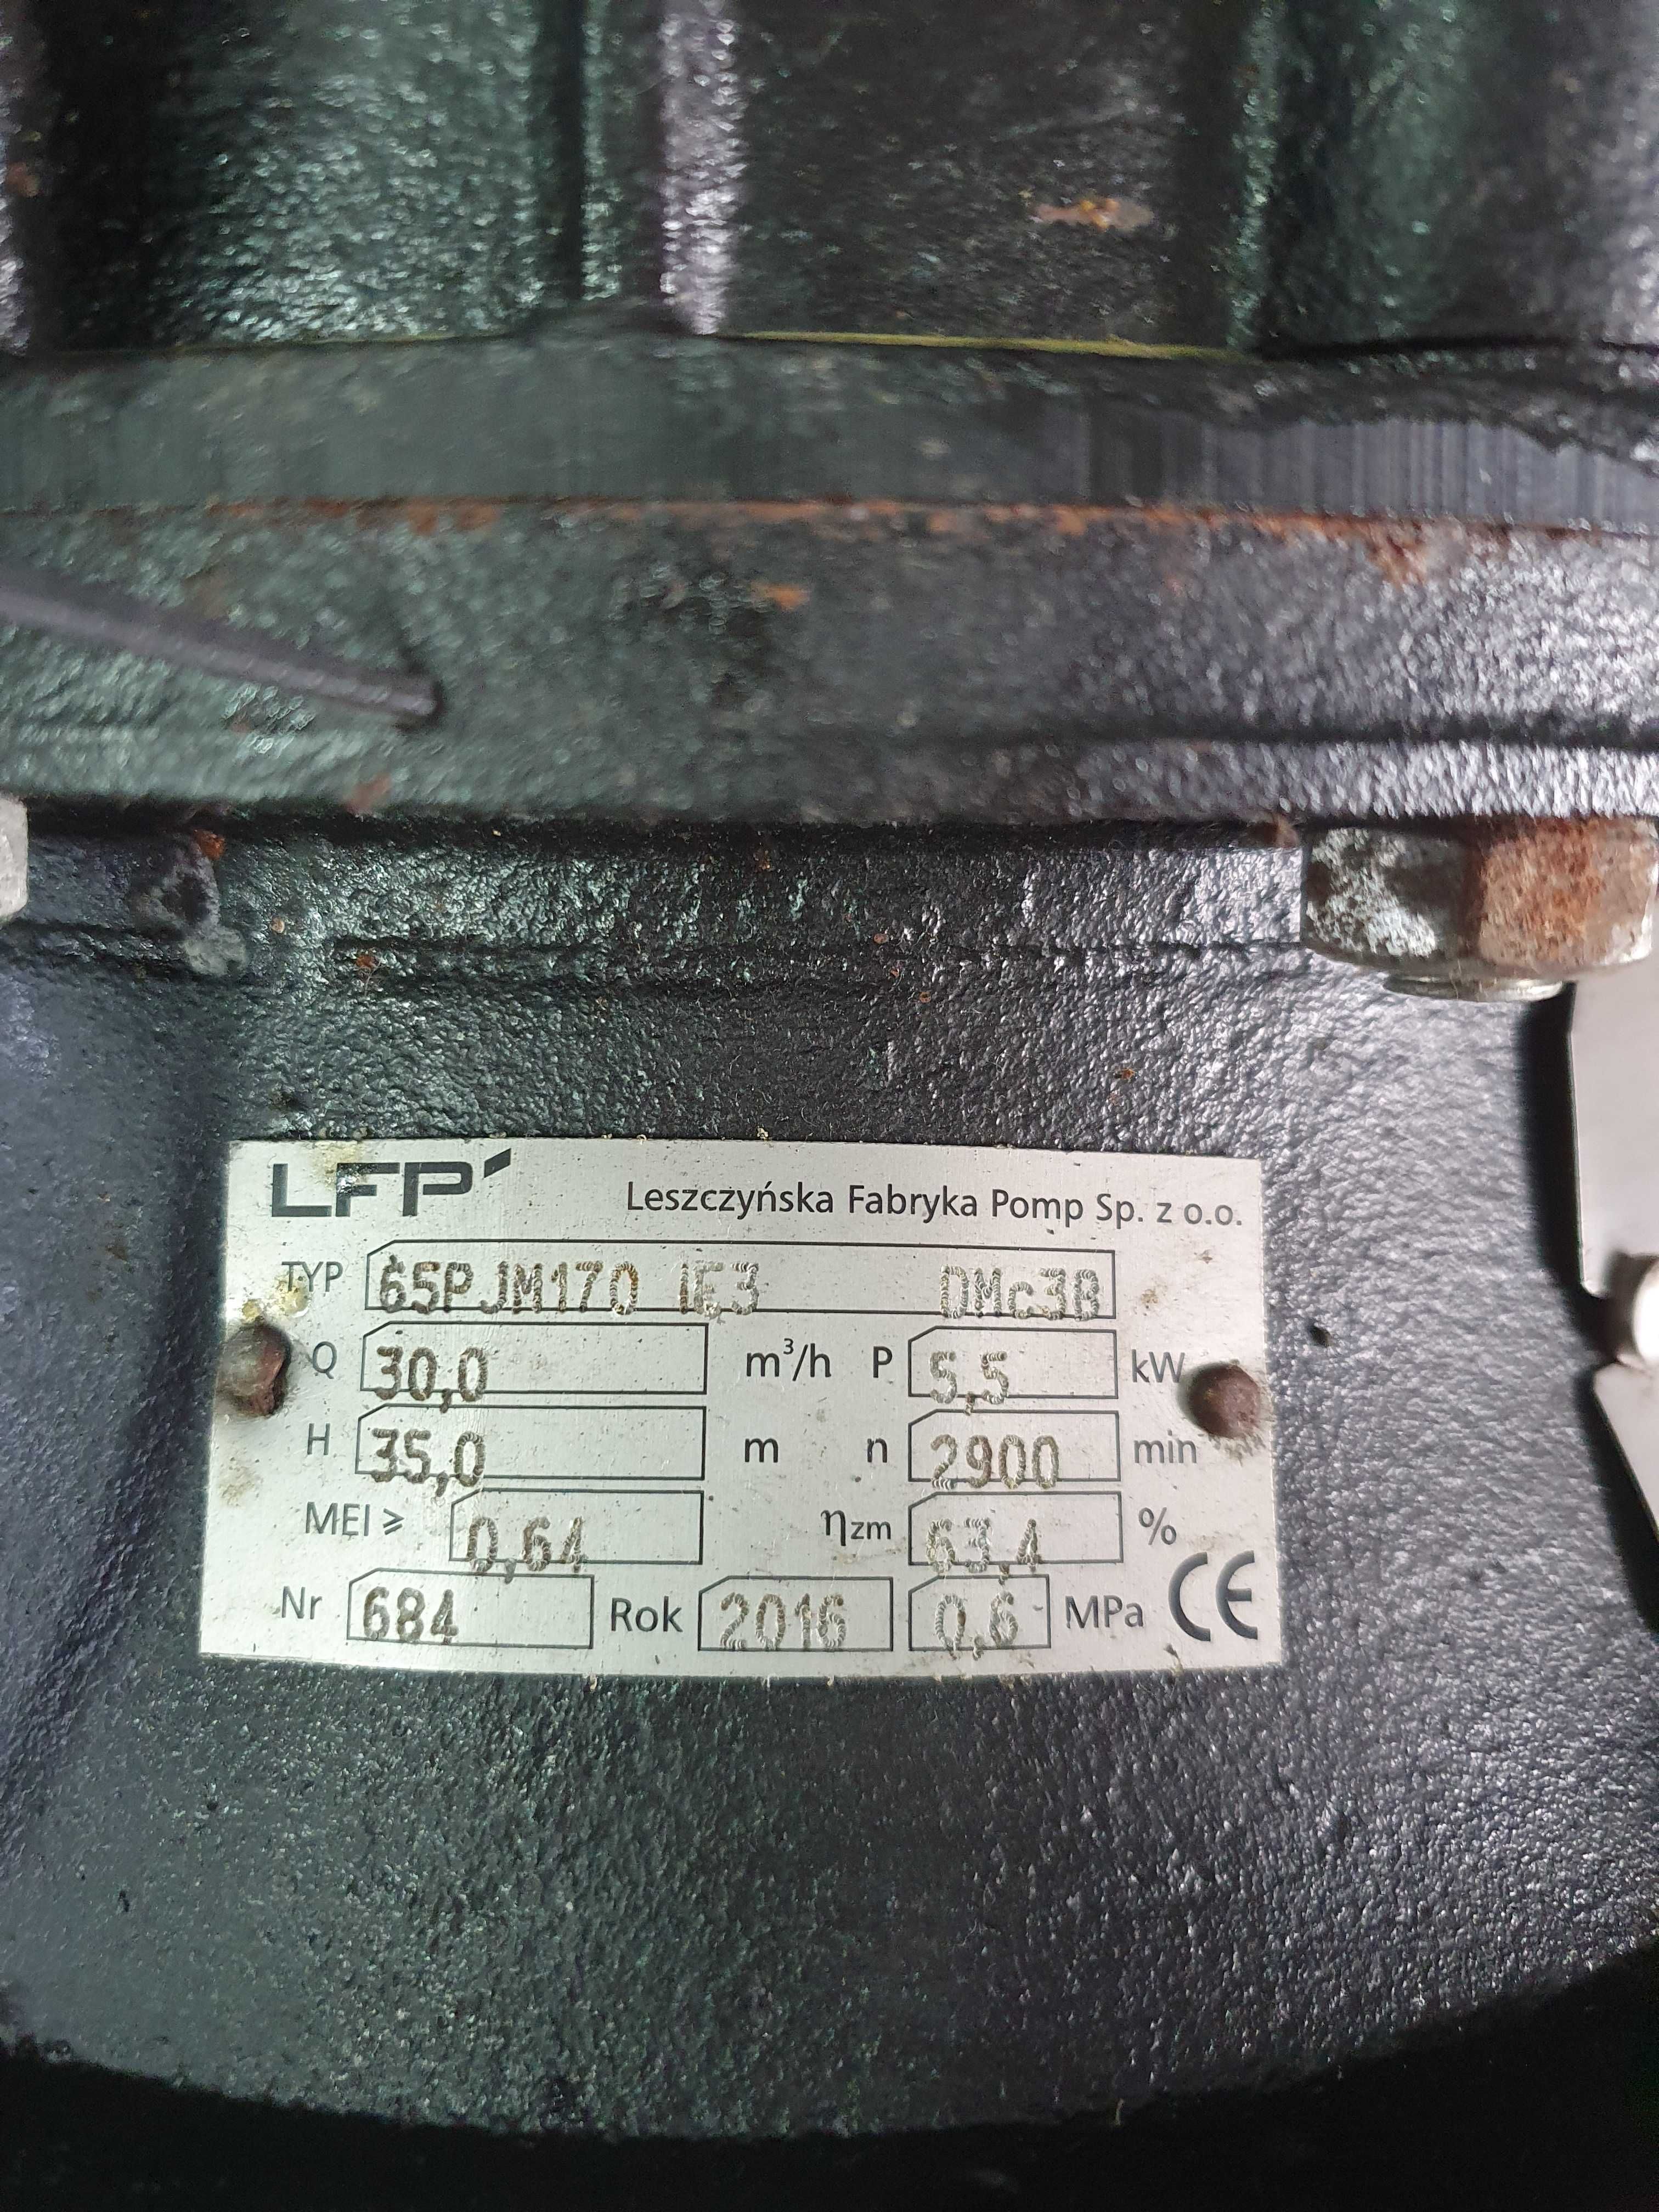 Pompa LFP 65PJM170 z falownikiem